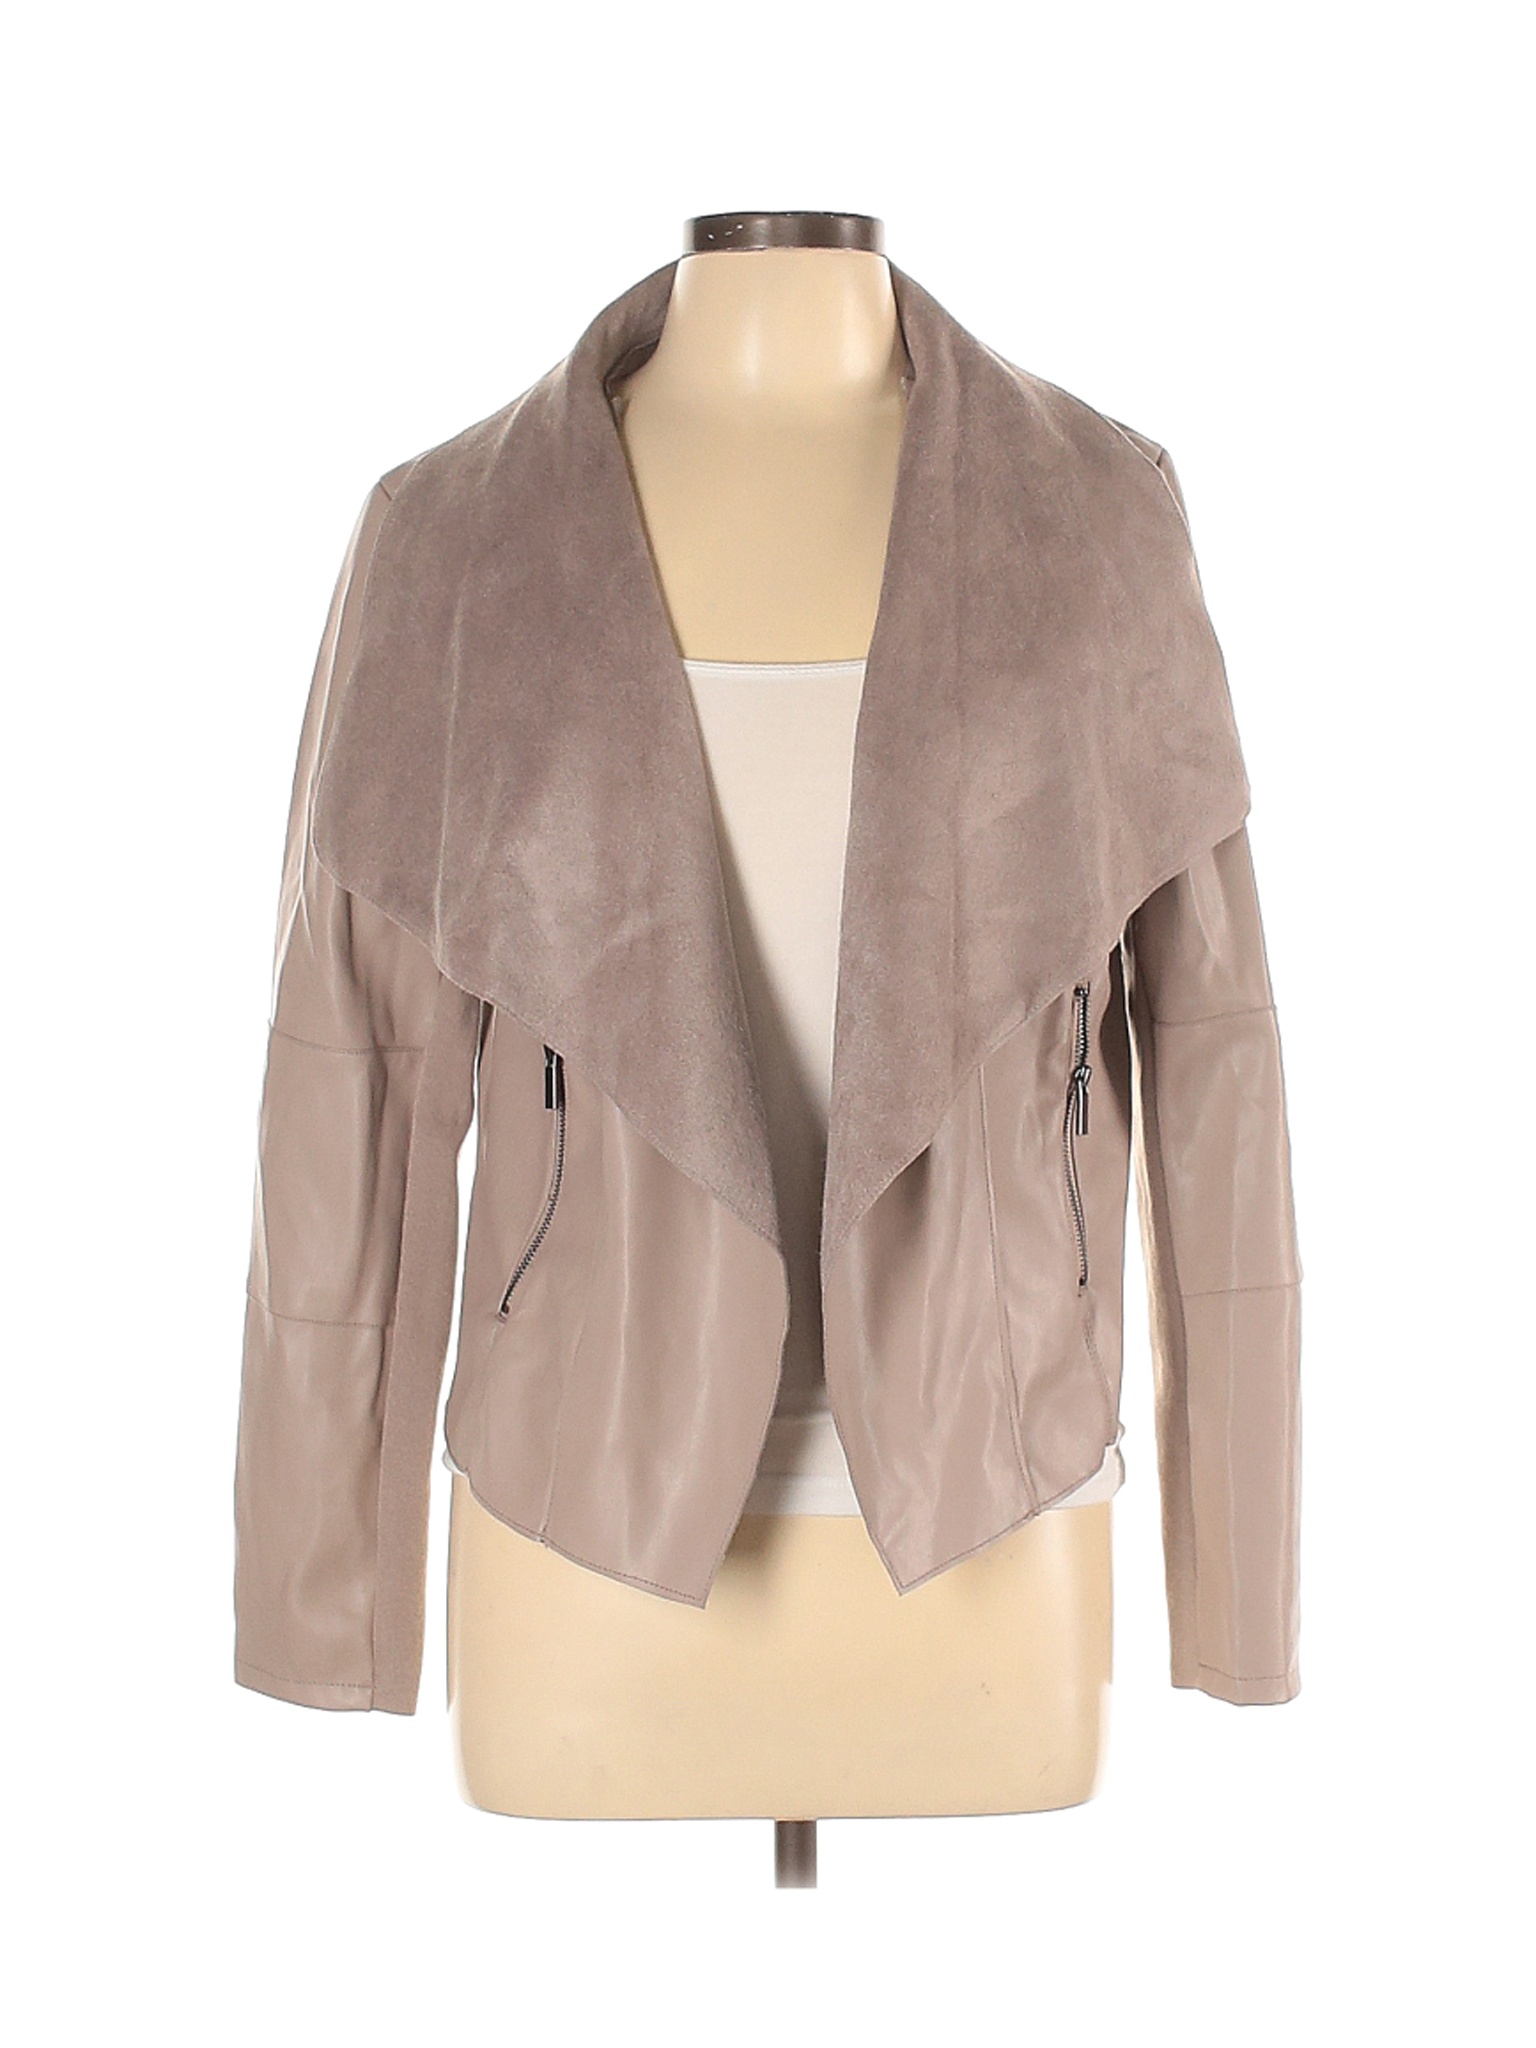 Bagatelle - Pre-Owned Bagatelle Women's Size L Faux Leather Jacket ...